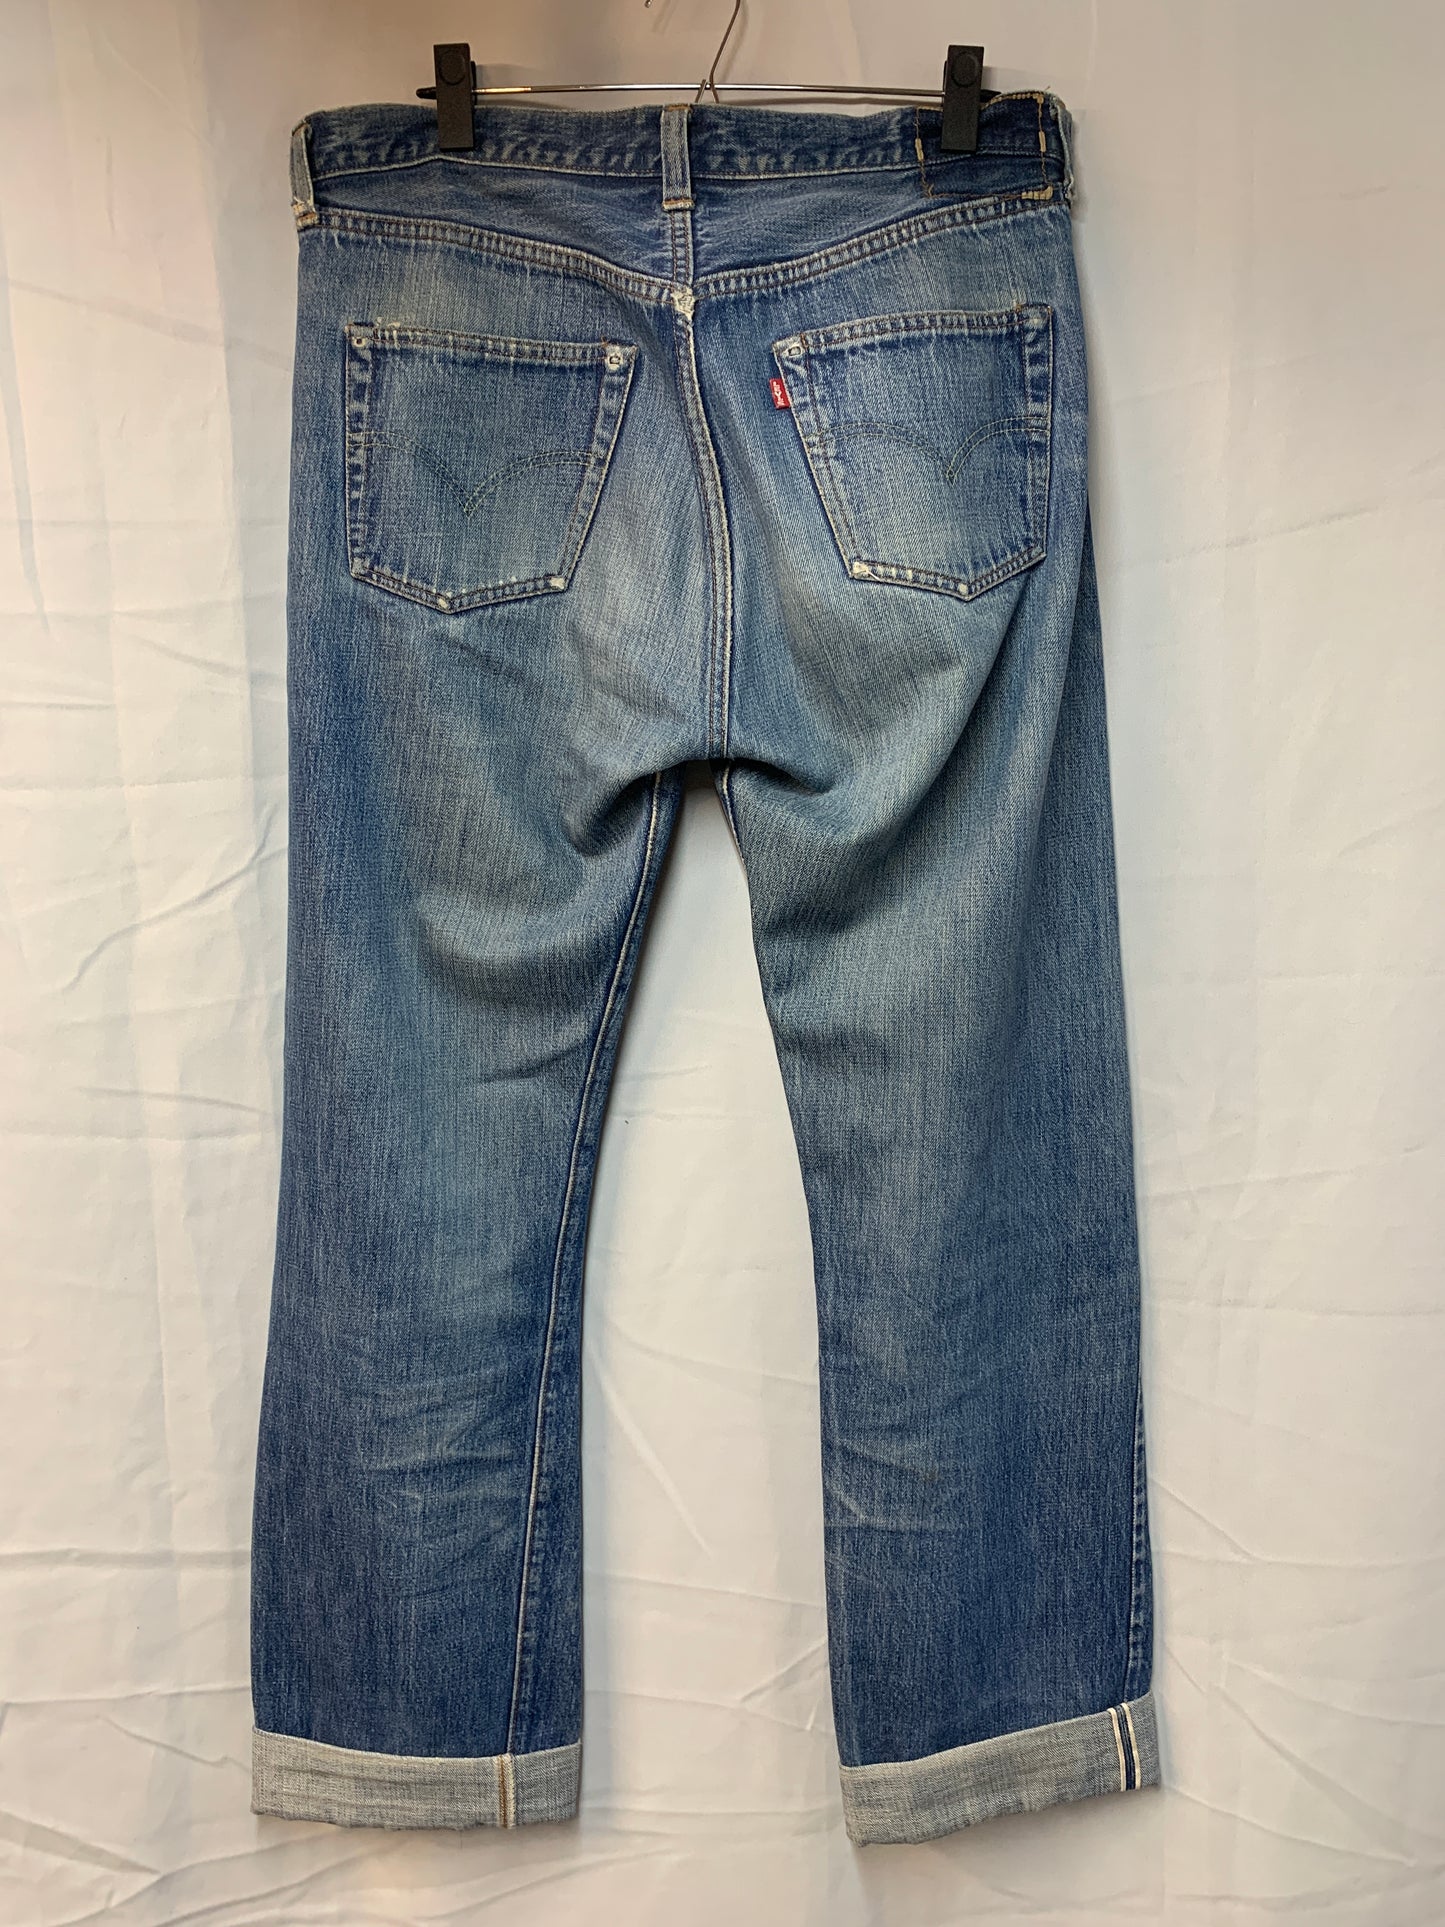 LVC - Denim Jeans model 1947 - 38x38 (35x34)